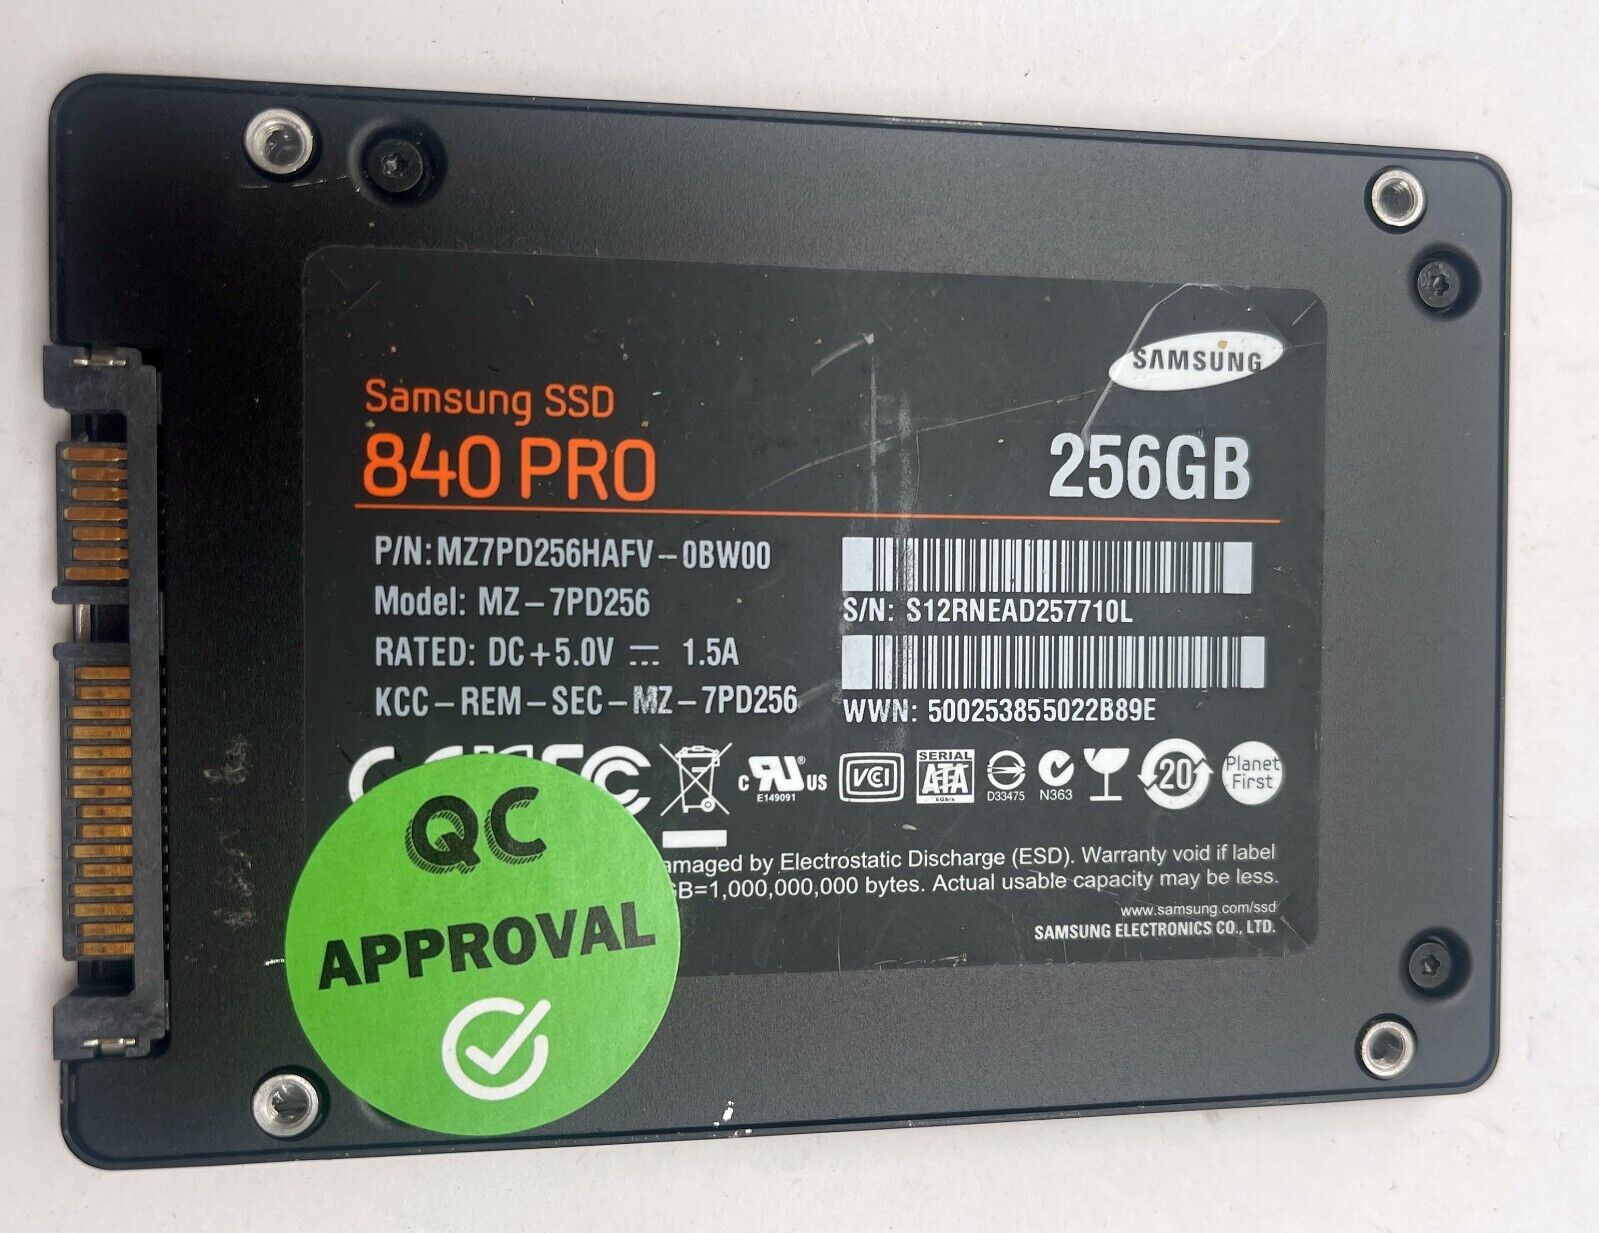 Samsung SSD 840 PRO 256 GB SSD MZ-7PD256 Solid State Drive